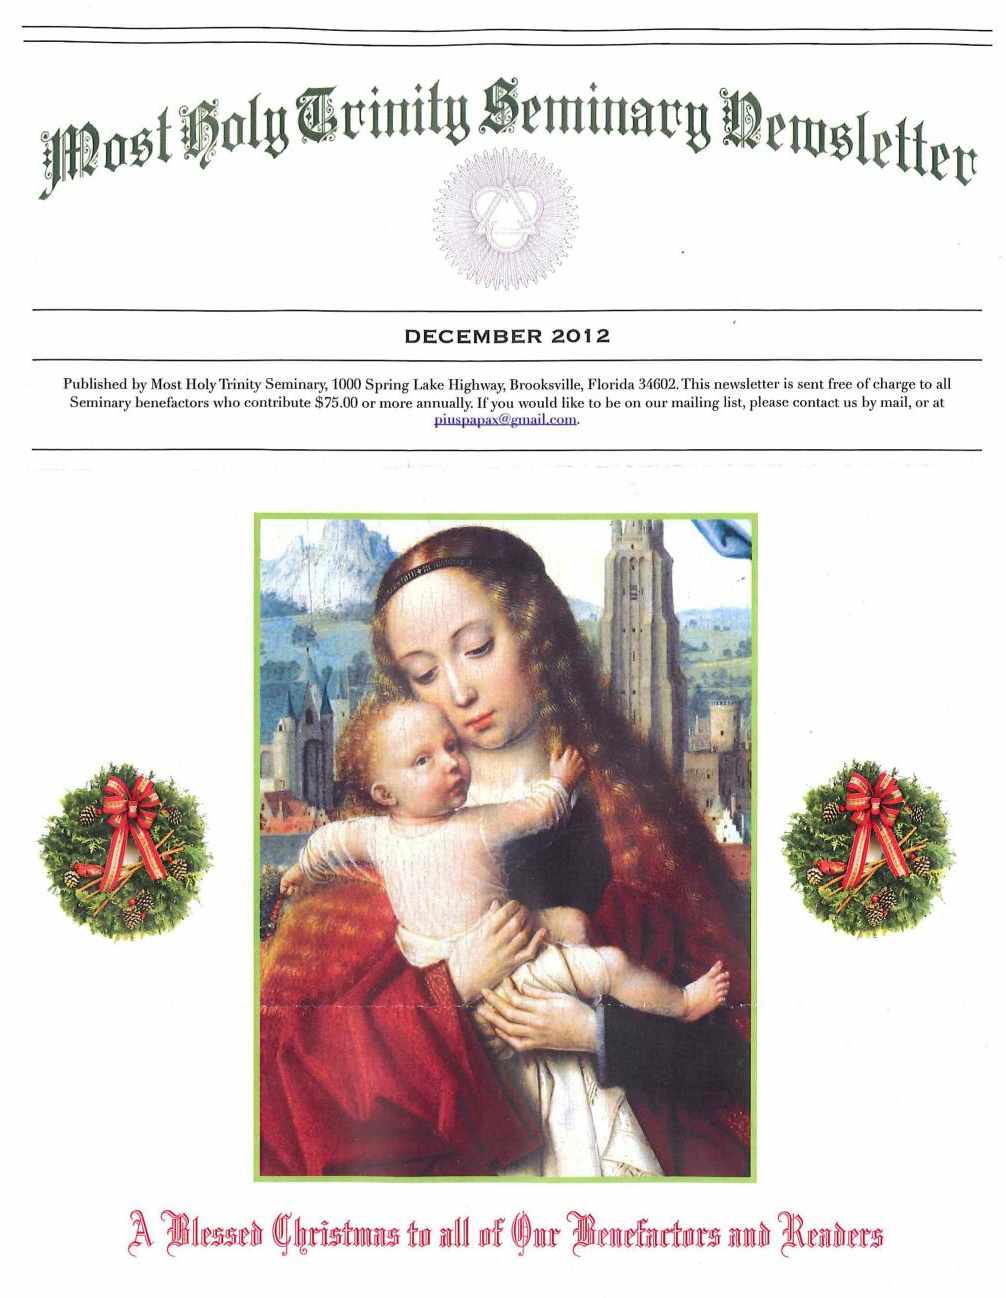 "Most Holy Trinity Seminary Newsletter", December 2012